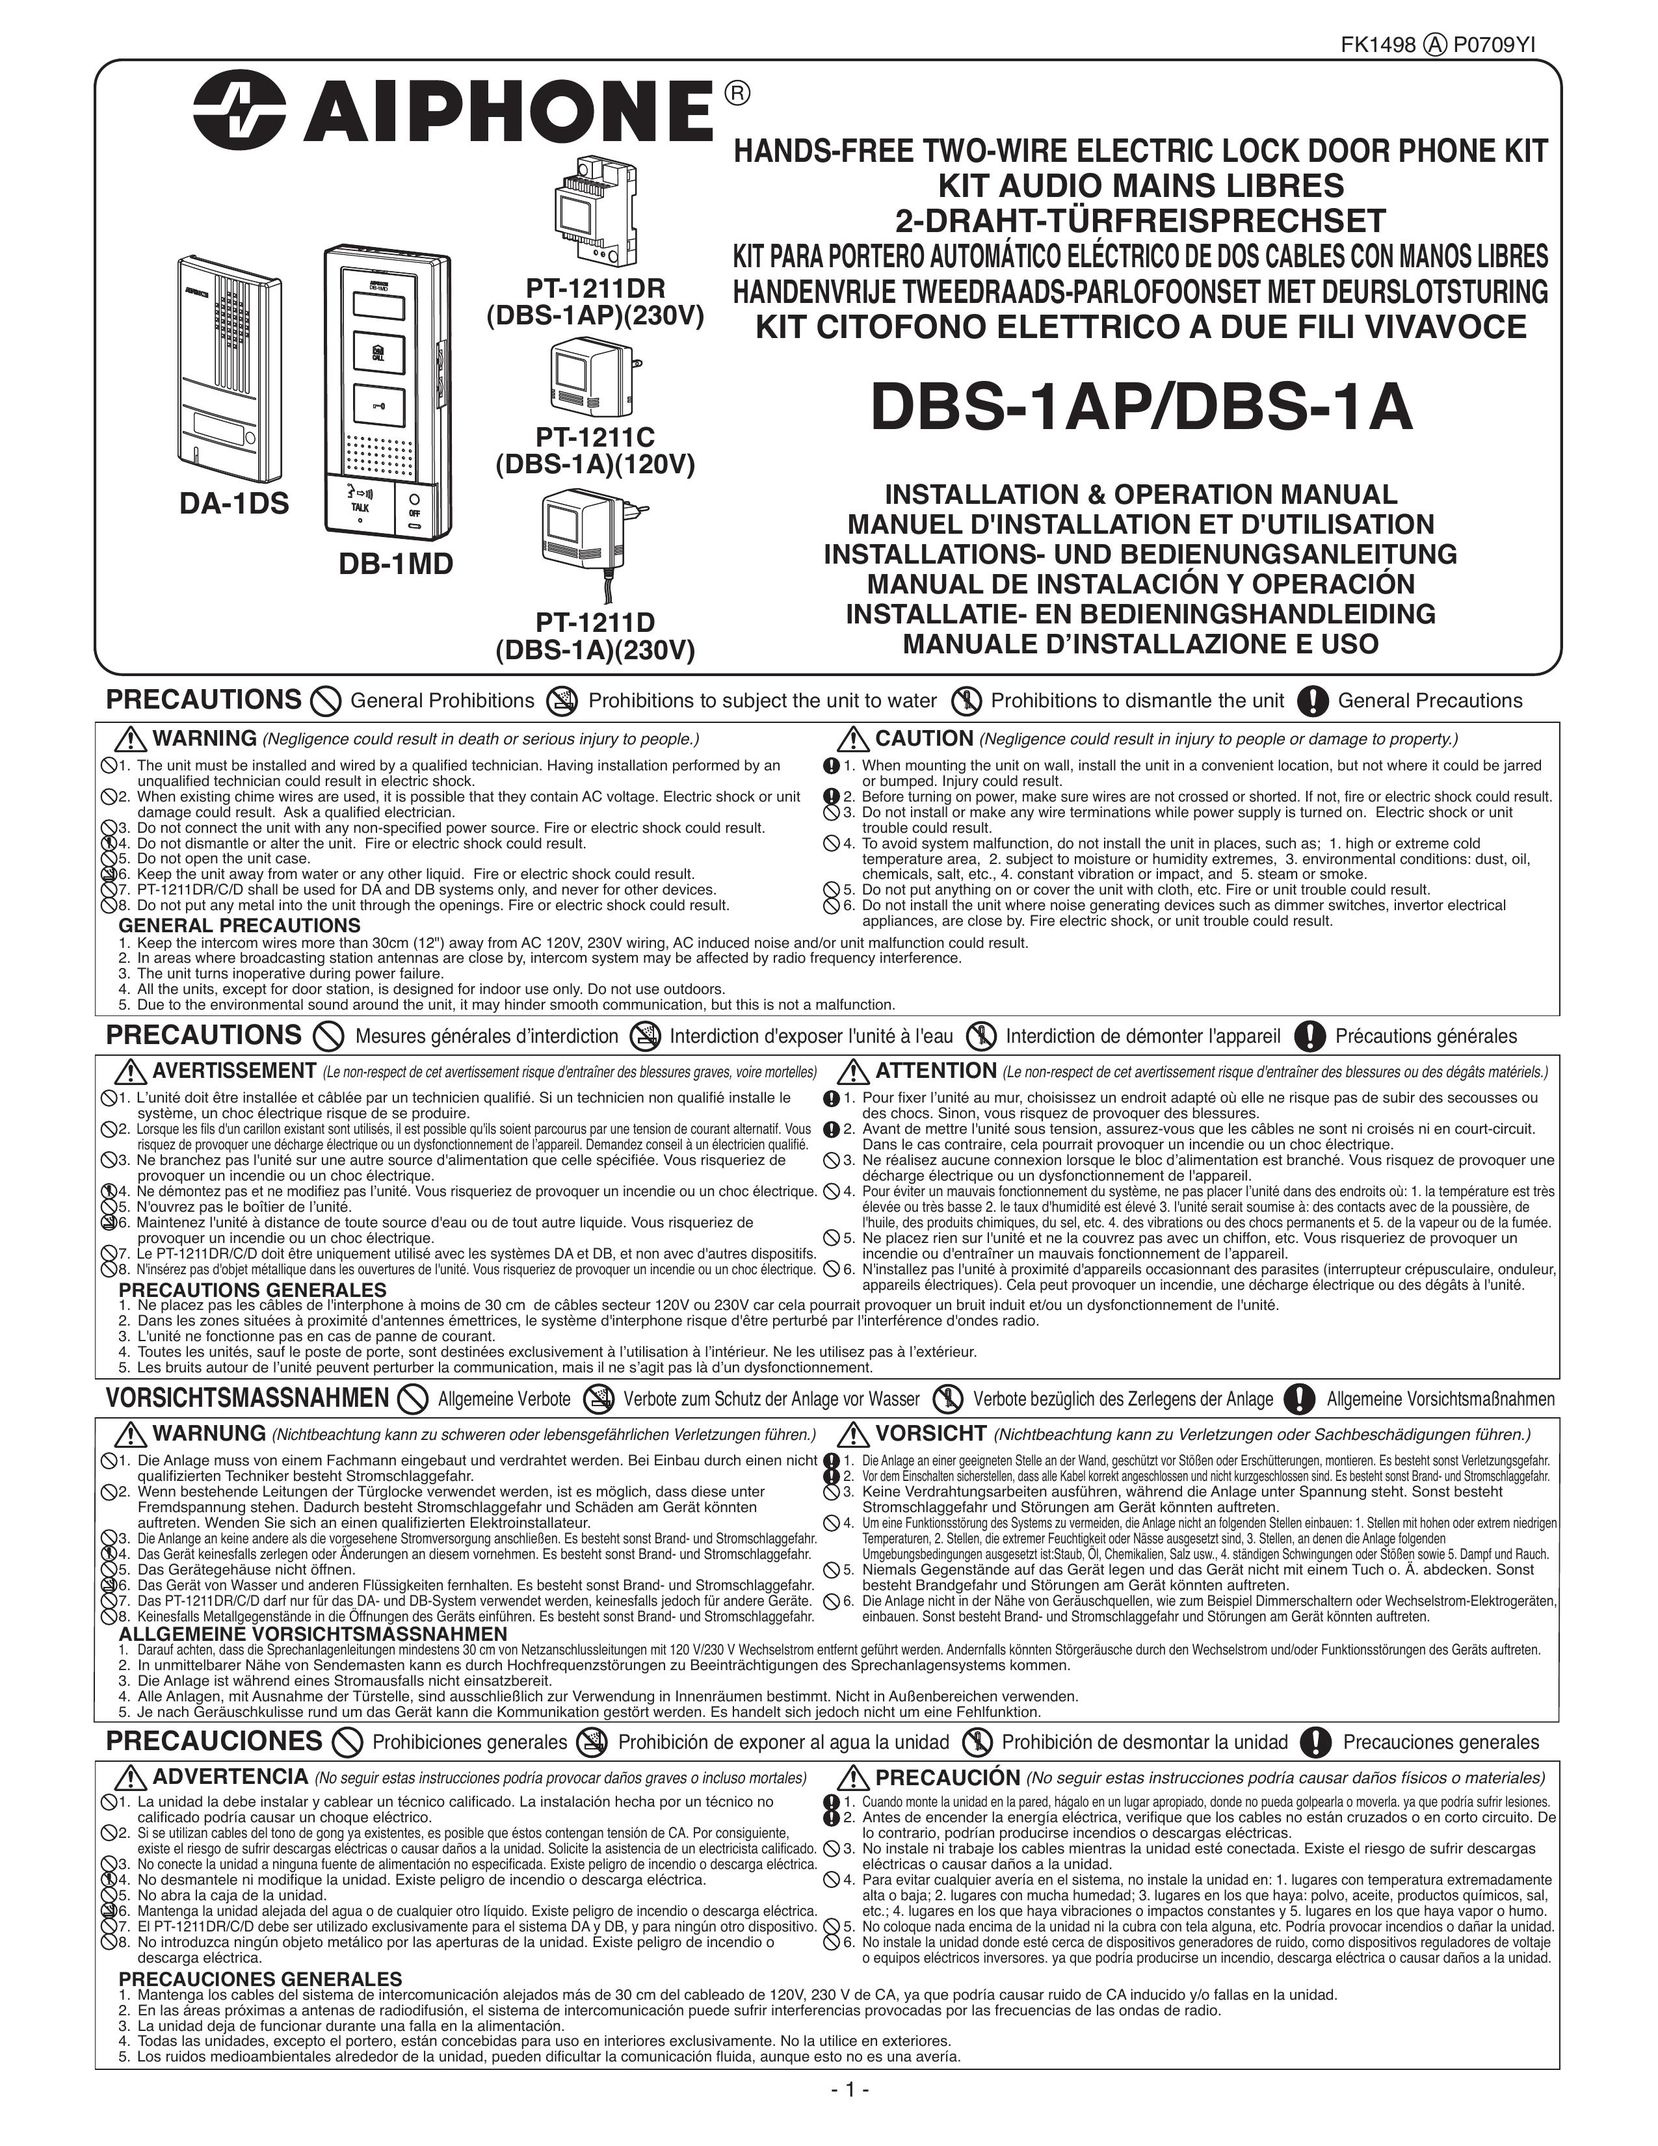 Aiphone DBS-1AP Door User Manual